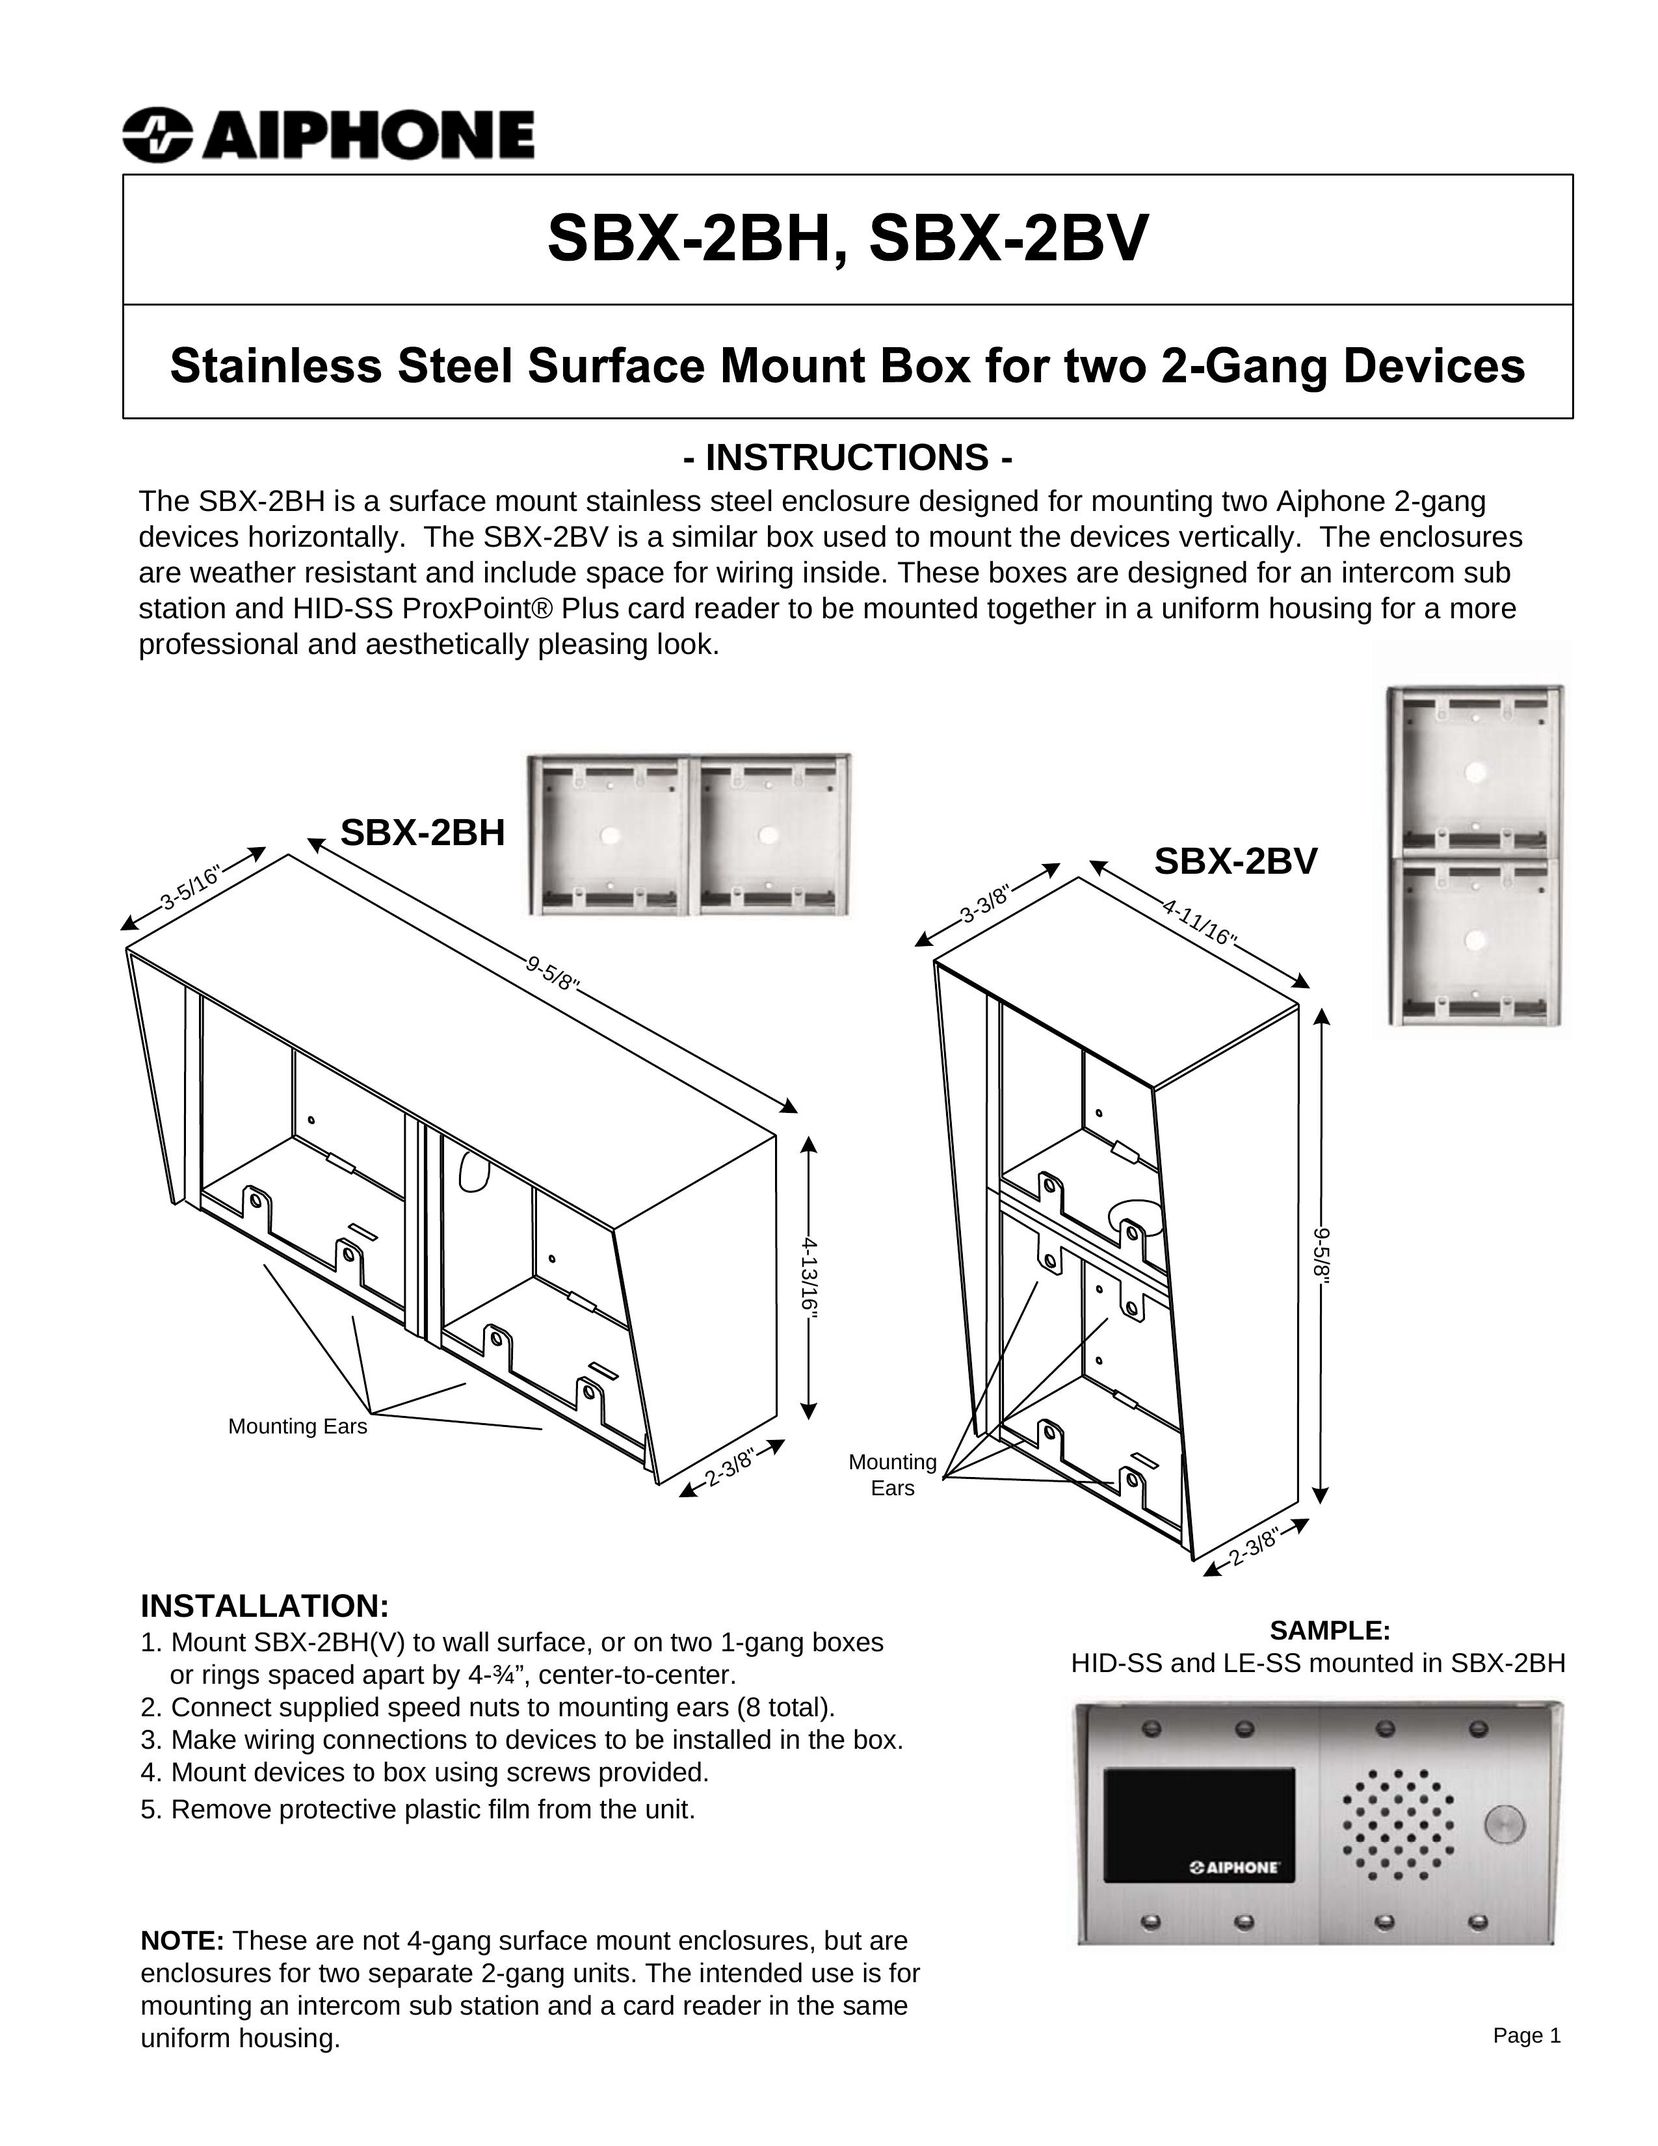 Aiphone SBX-2BV TV Mount User Manual